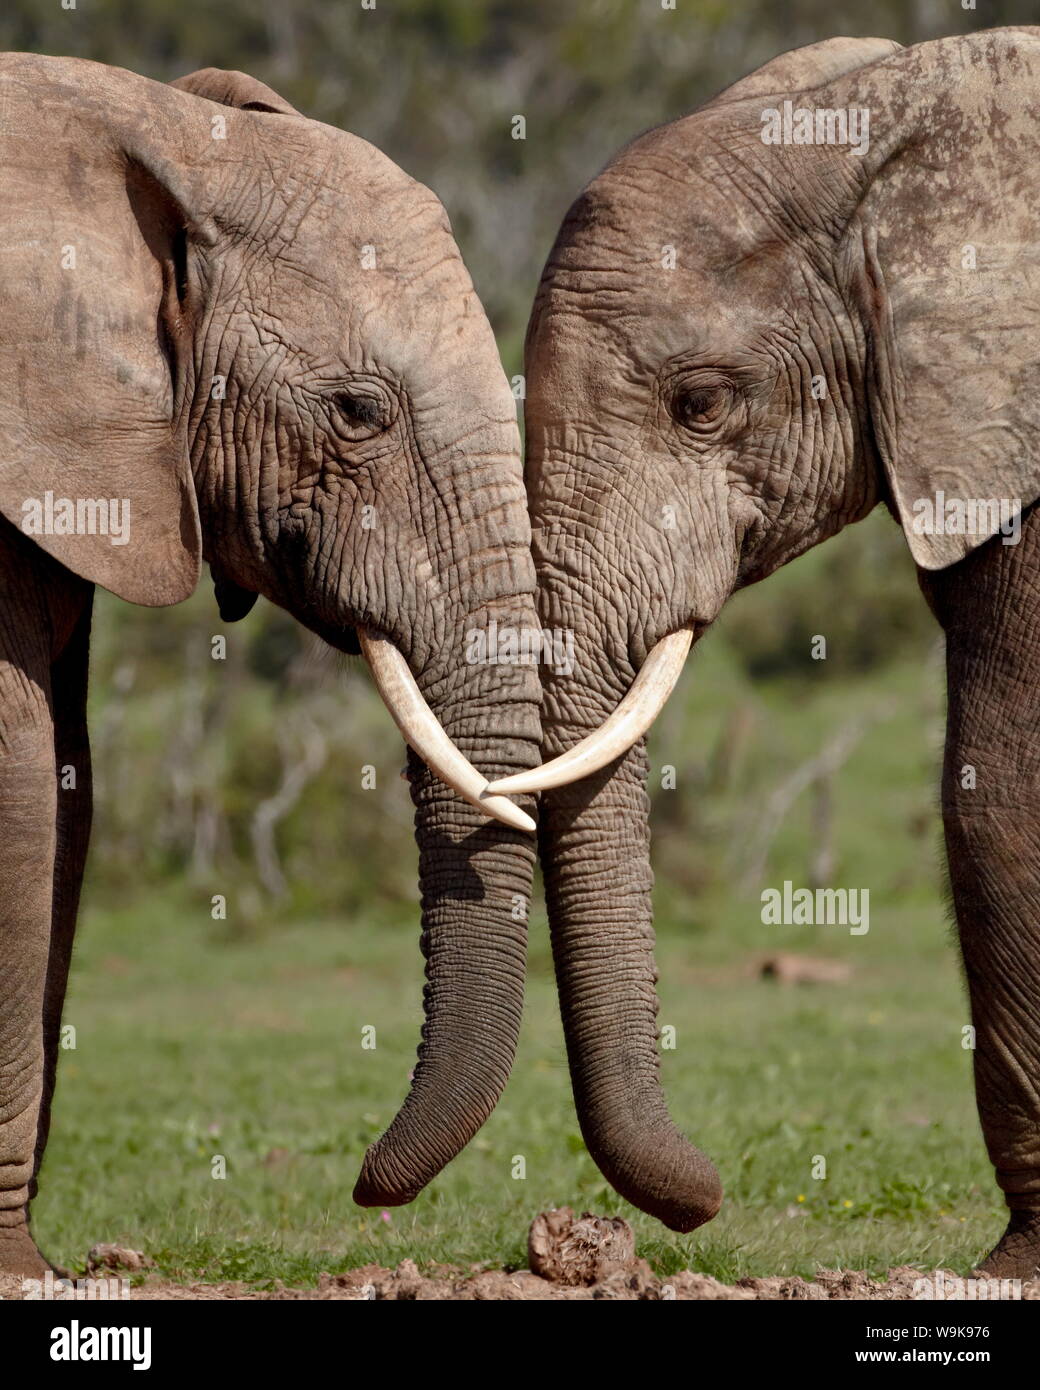 Zwei afrikanische Elefanten (Loxodonta Africana) Gesicht an Gesicht, Addo Elephant National Park, Südafrika, Afrika Stockfoto